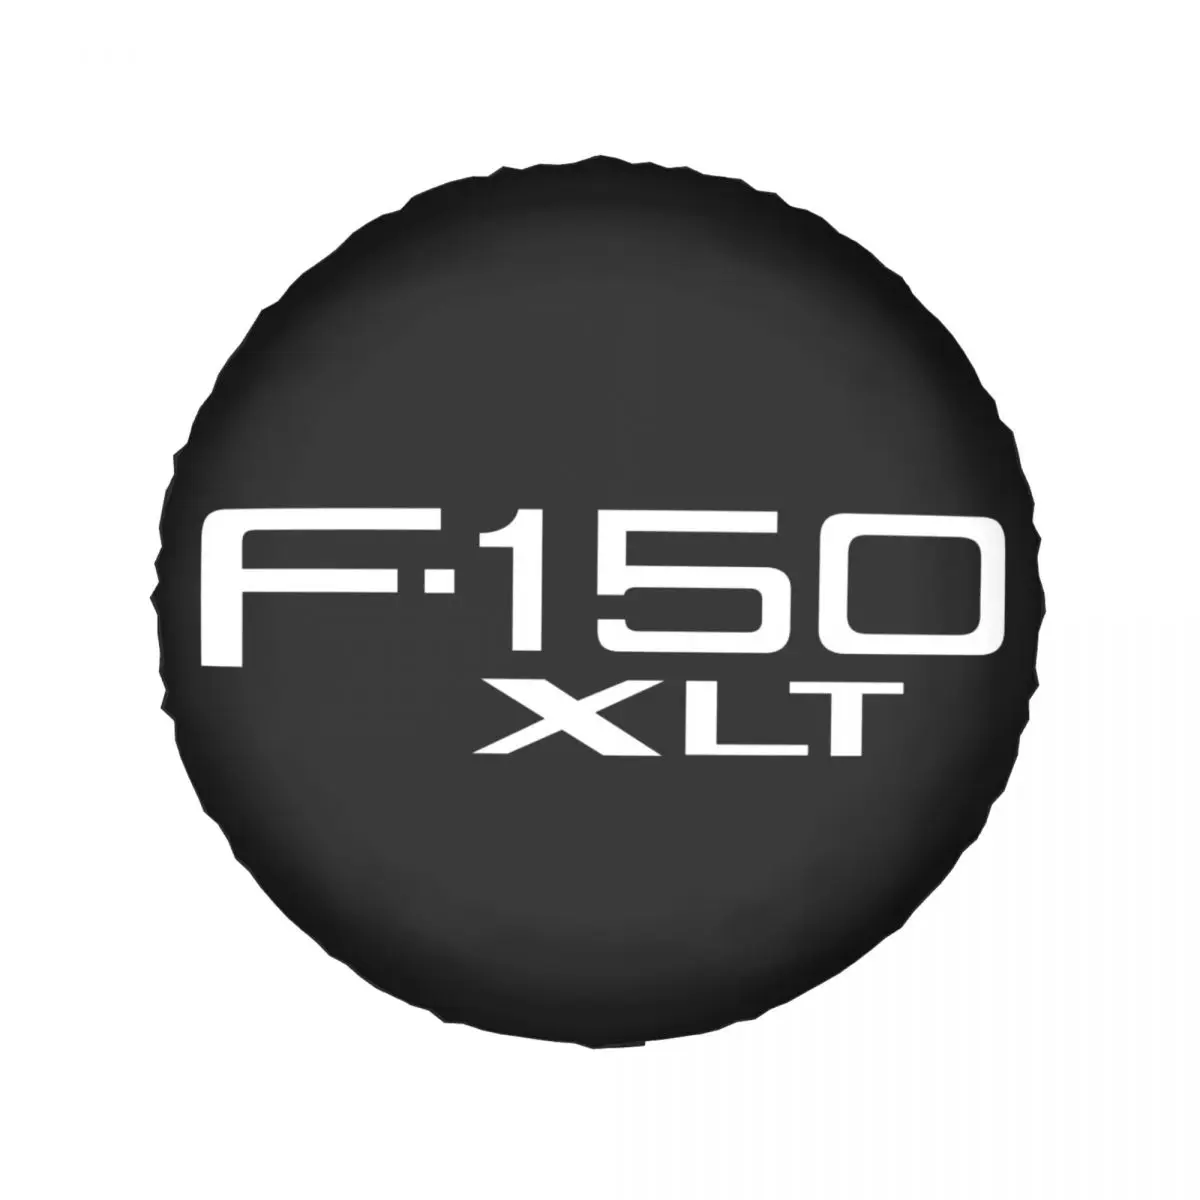 F 150 XLT המכונית גלגל החילוף בגלגל כיסוי עבור פורד פרדו Pajero רנגלר ג 'יפ RV שטח נופש רכב אביזרים 14